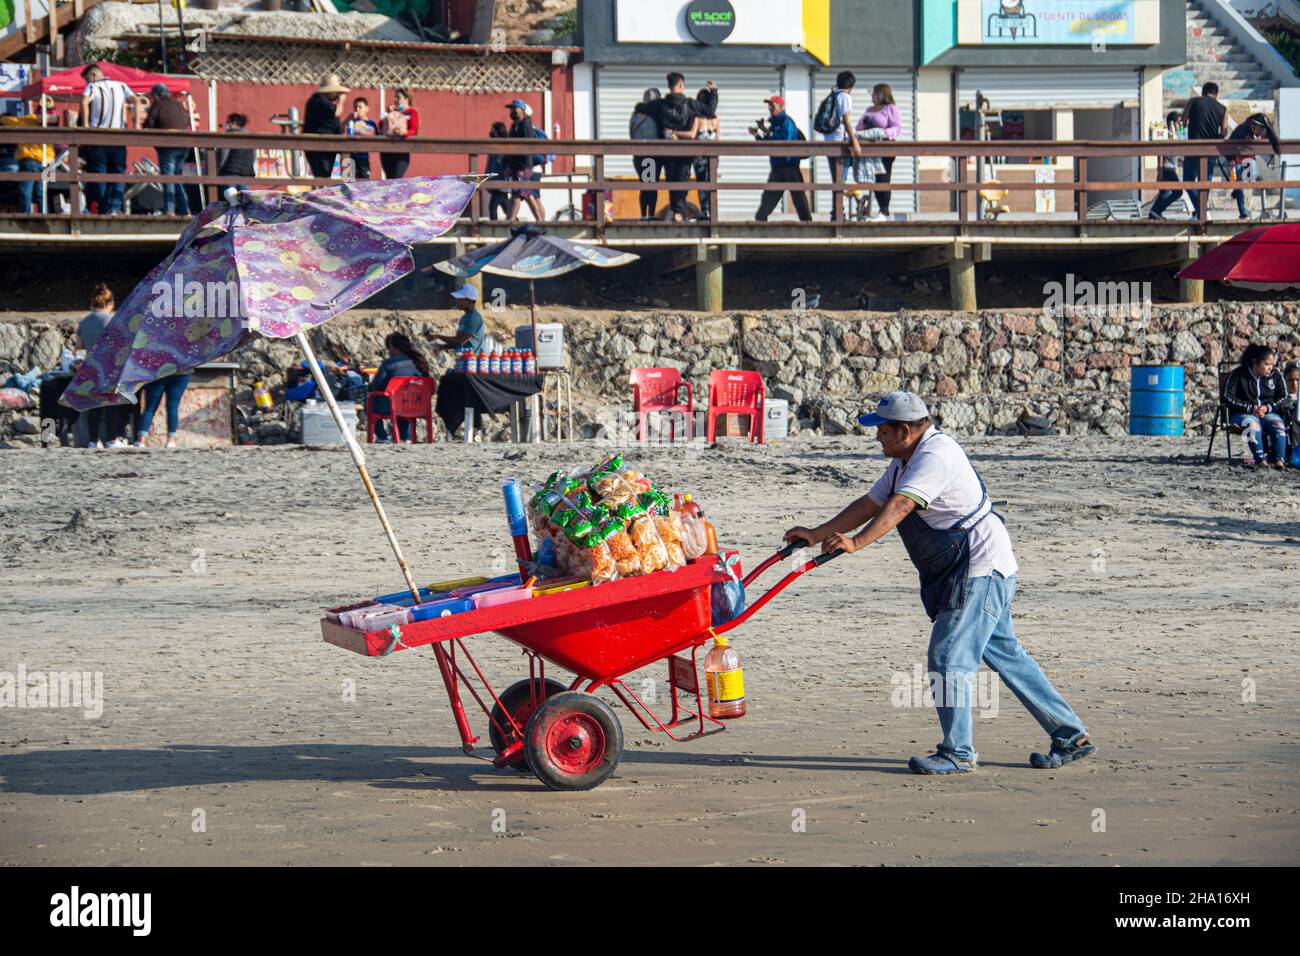 A Mexican vender pushes his cart laden with vegetables across the sand of Tijuana Beach, (Playas de Tijuana) Baja California, Mexico. Stock Photo